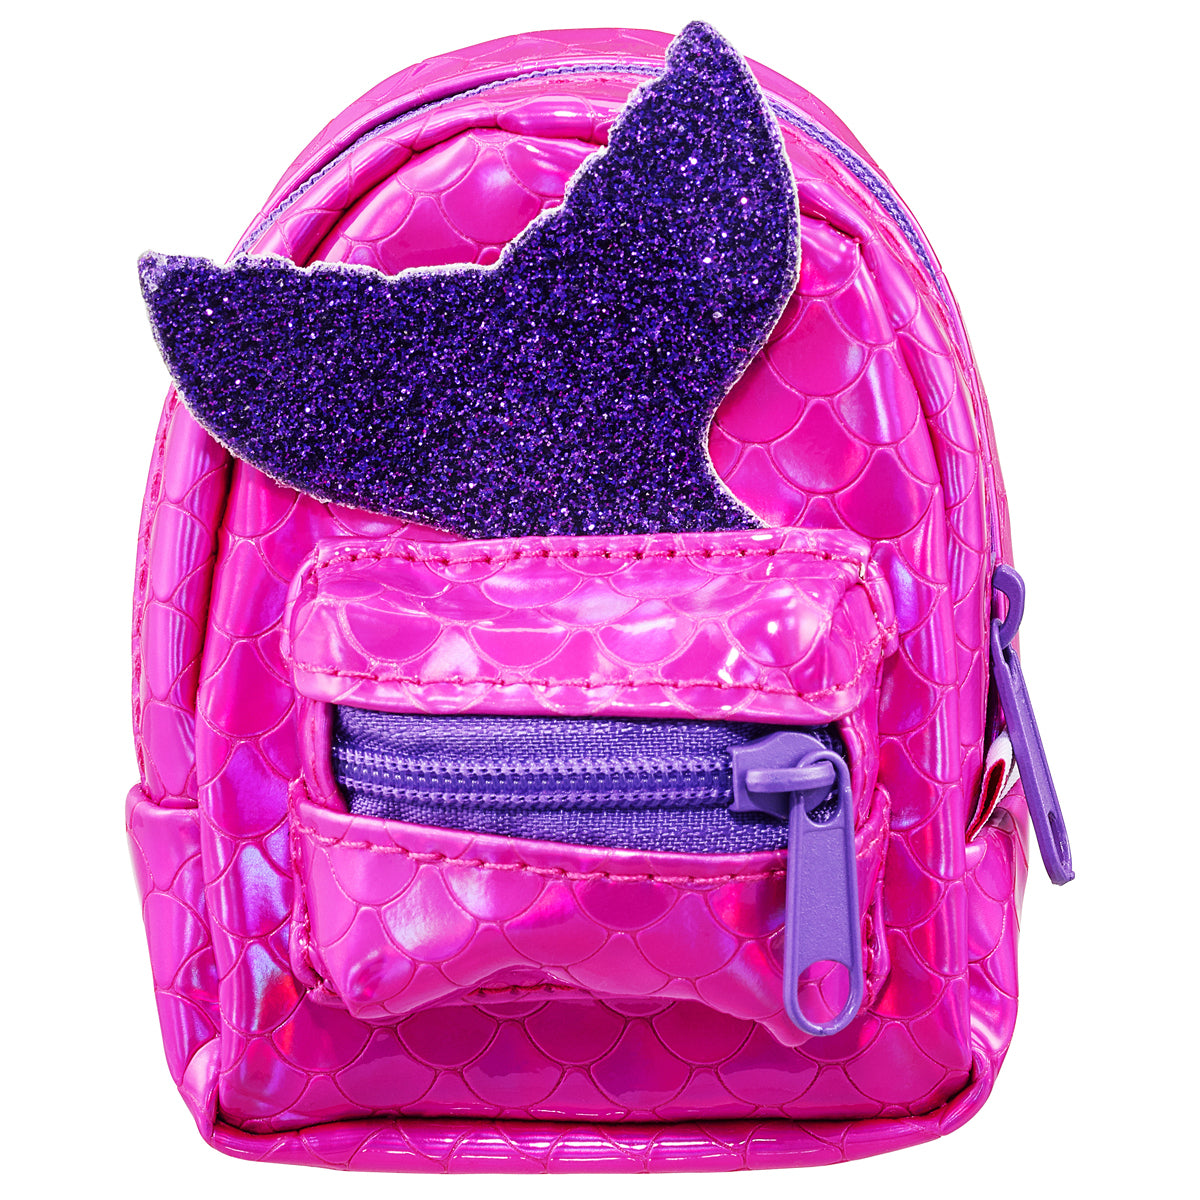 Real Littles Backpack and Handbag Set